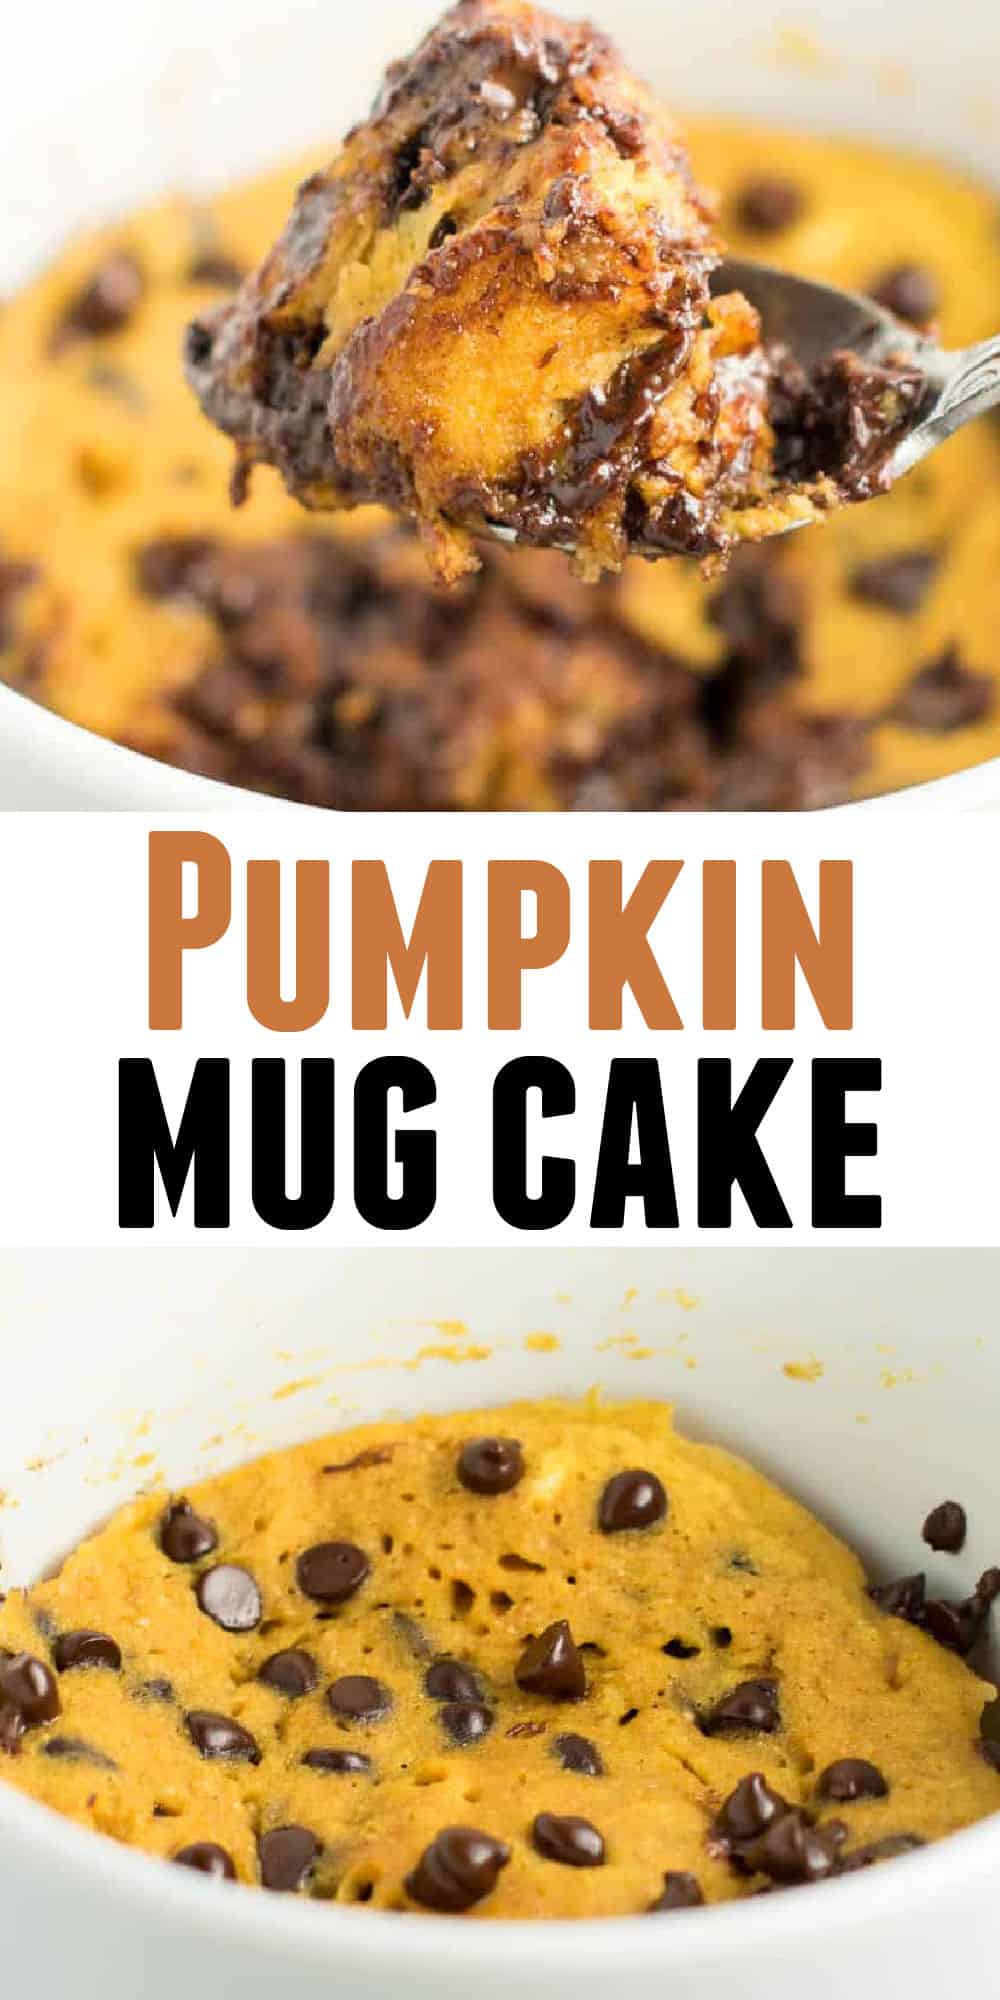 image with text "pumpkin mug cake"